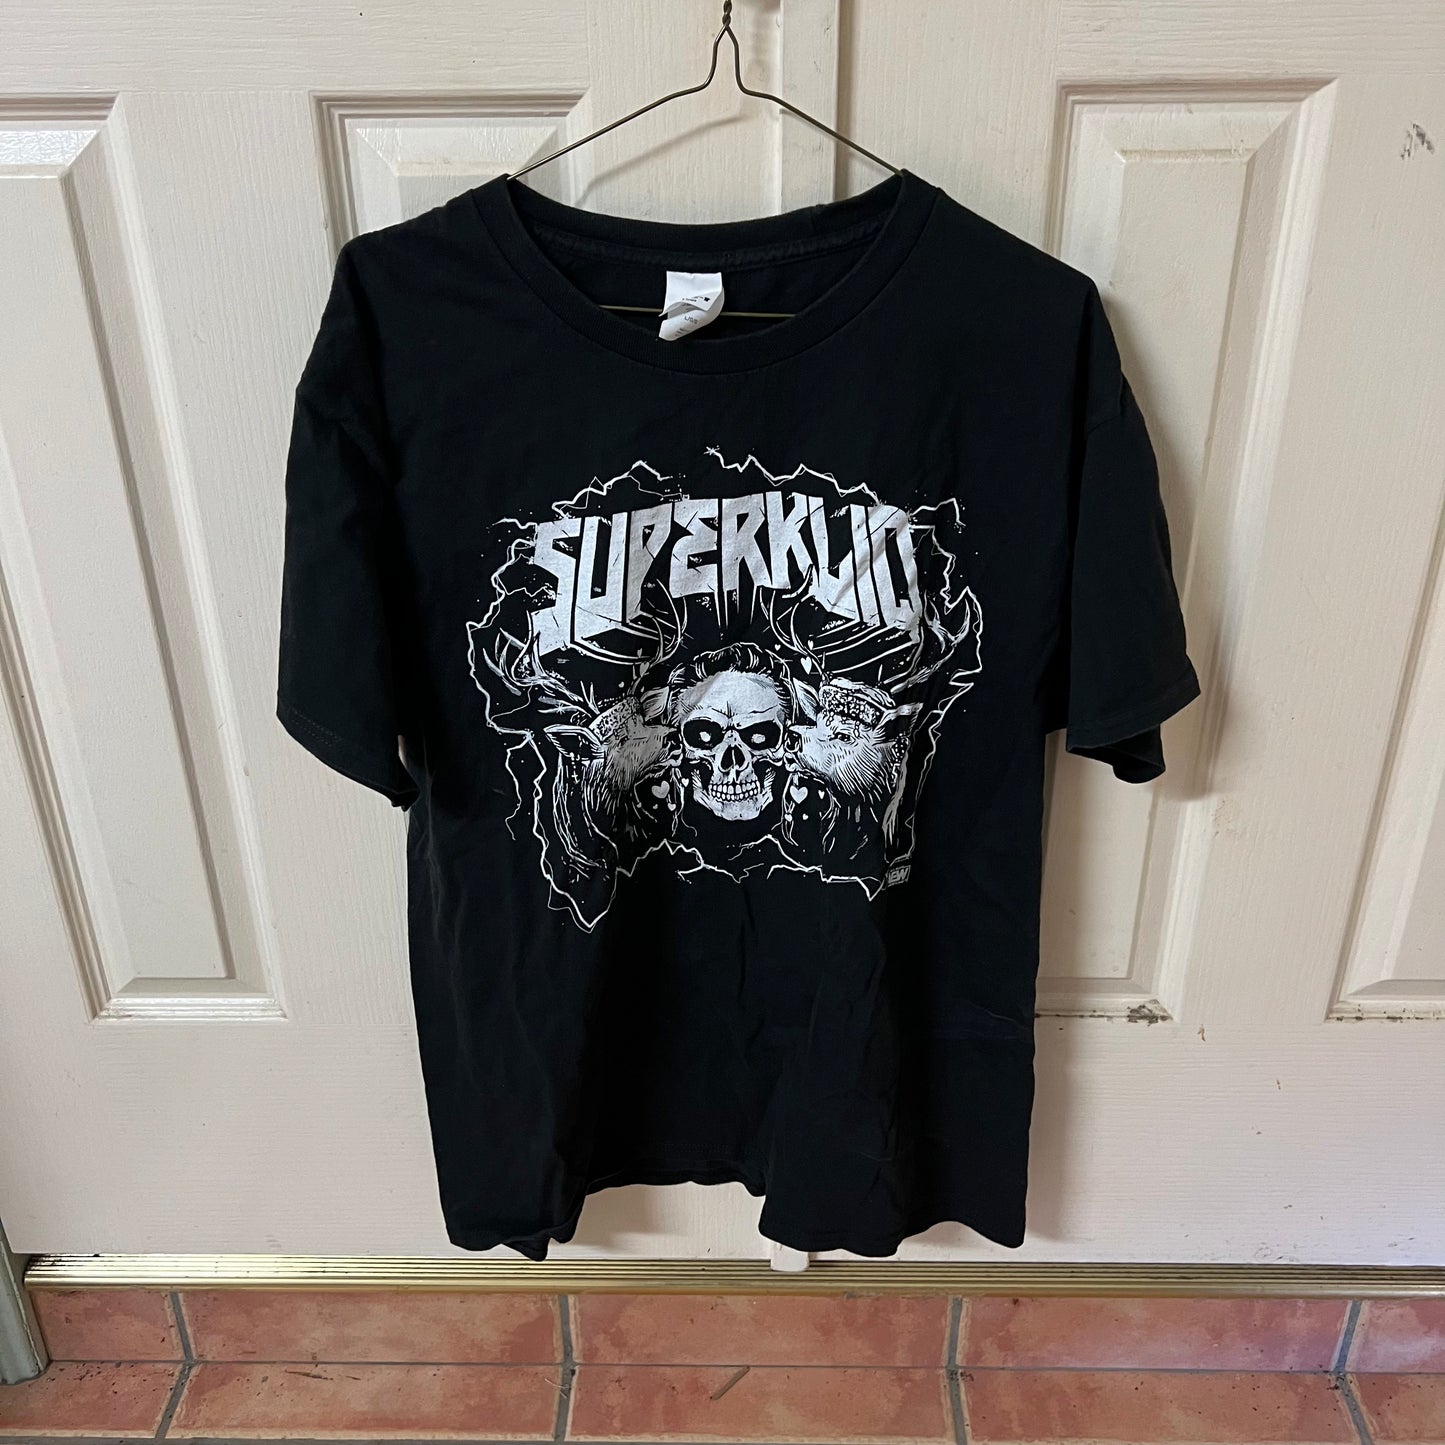 Superkliq - Large Size - Official AEW Shirt